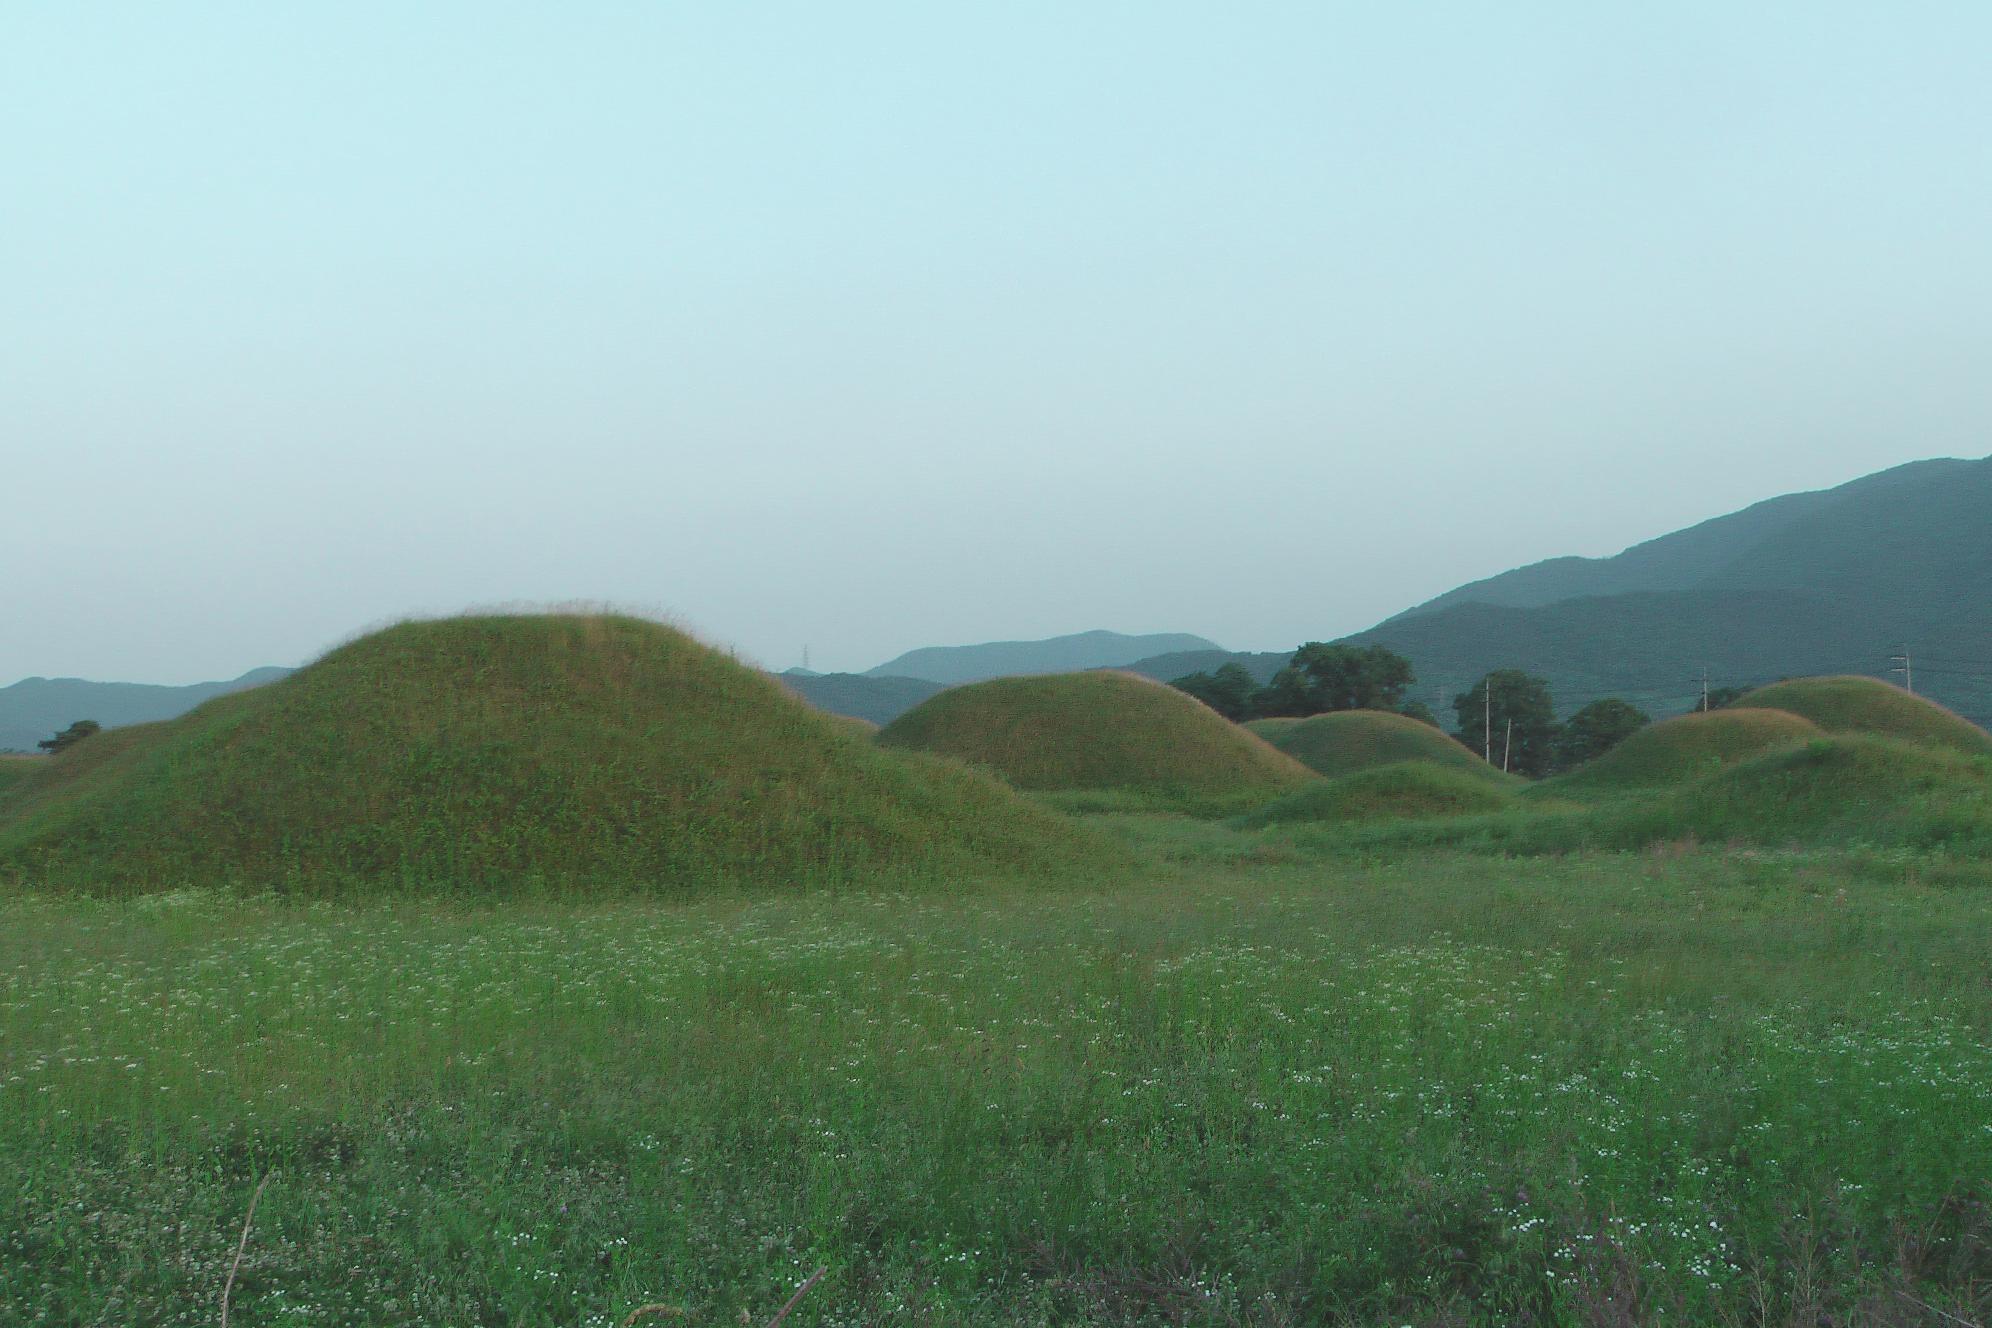 historic hill tombs close to Gyeongju